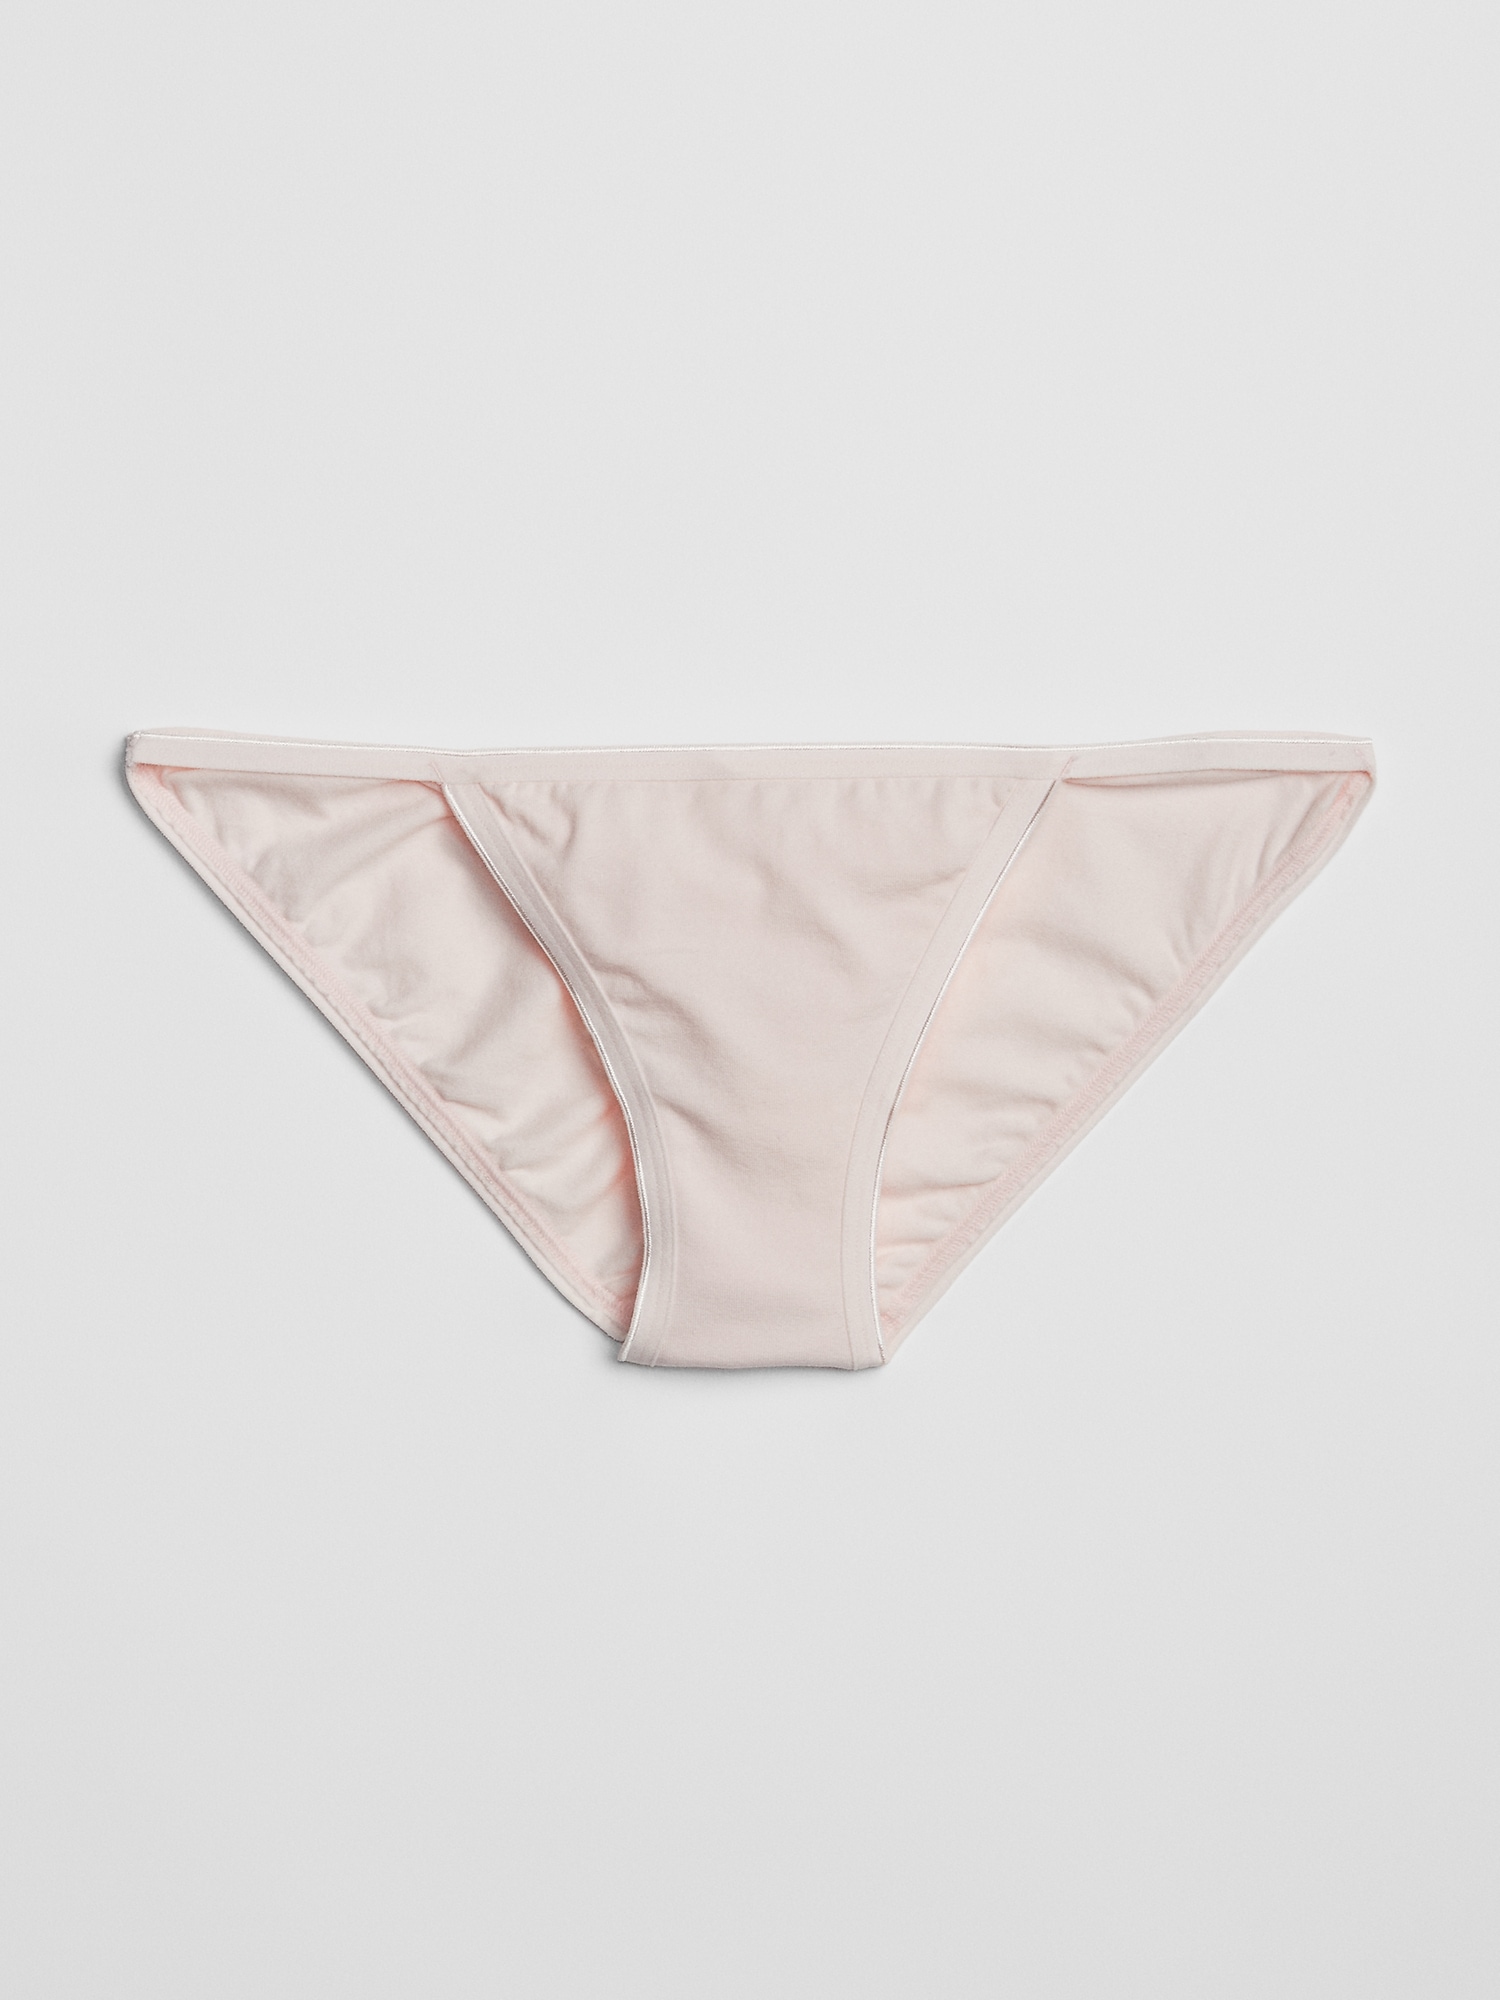 GAP LACE BIKINI Undies Stretch Cotton Women's Underwear Panties 1 Pcs NWT  $6.99 - PicClick